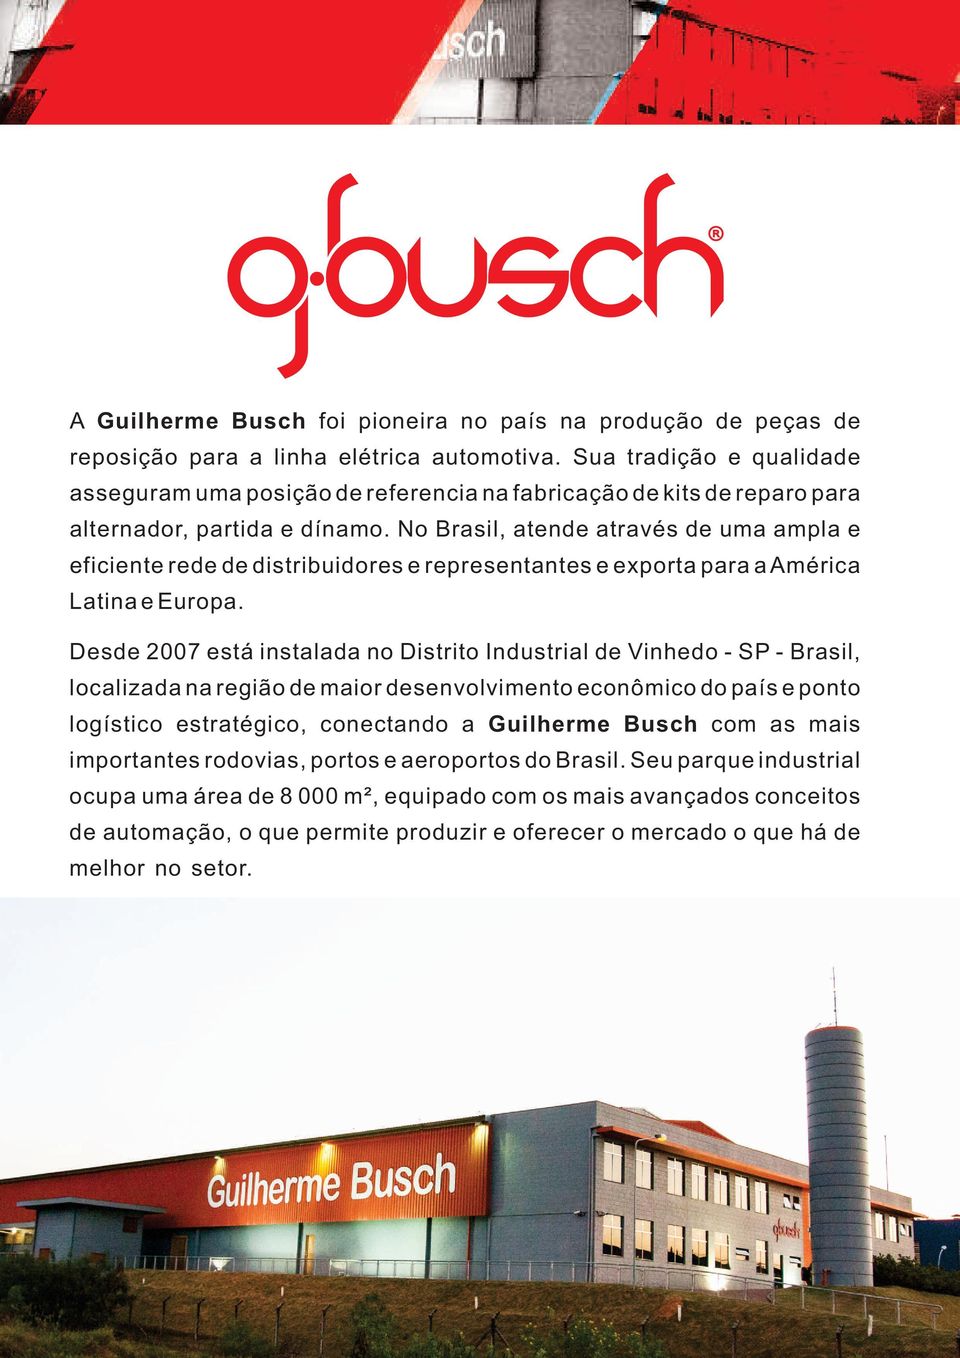 No Brasil, atende através de uma ampla e eficiente rede de distribuidores e representantes e exporta para a América Latina e Europa.